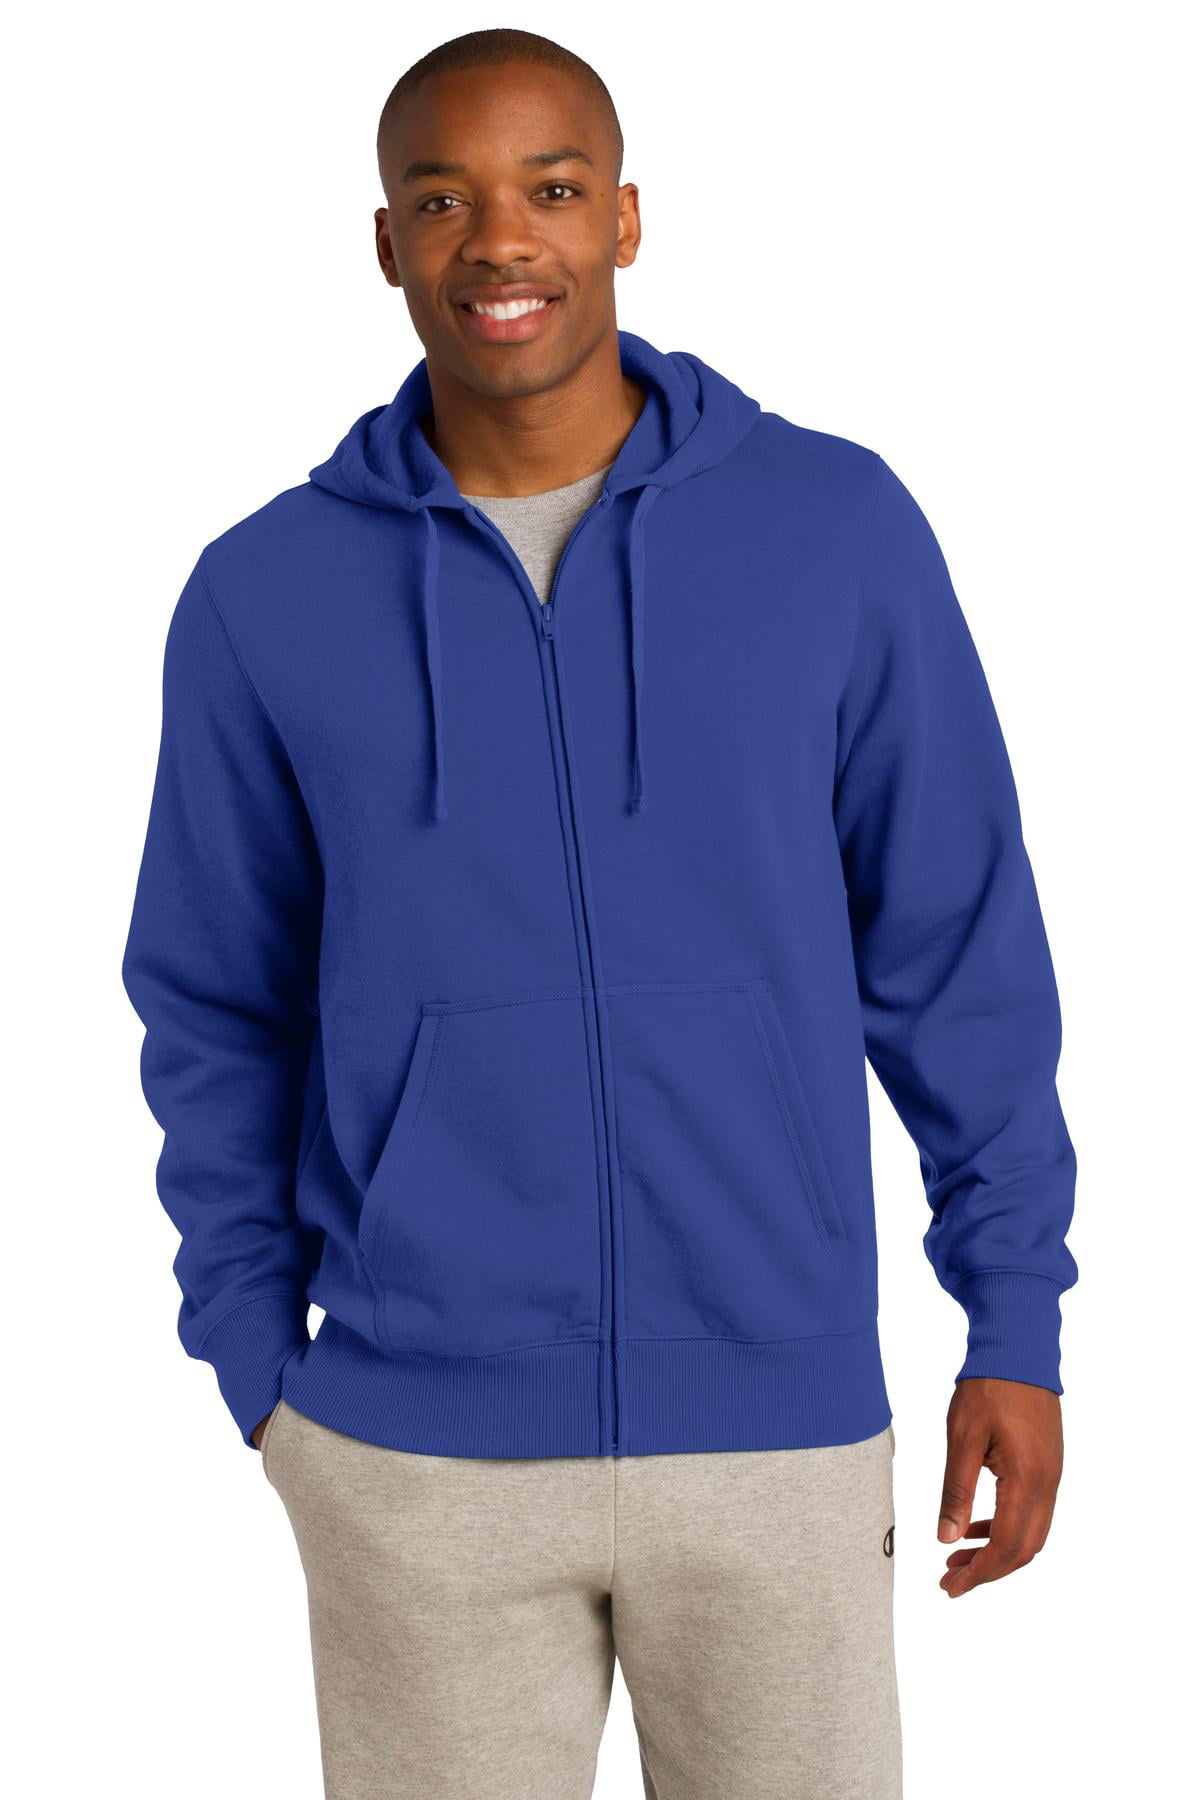 Zoot LTD Run Thermo Hoodie Full Zip Sweatshirt Blue XL Man